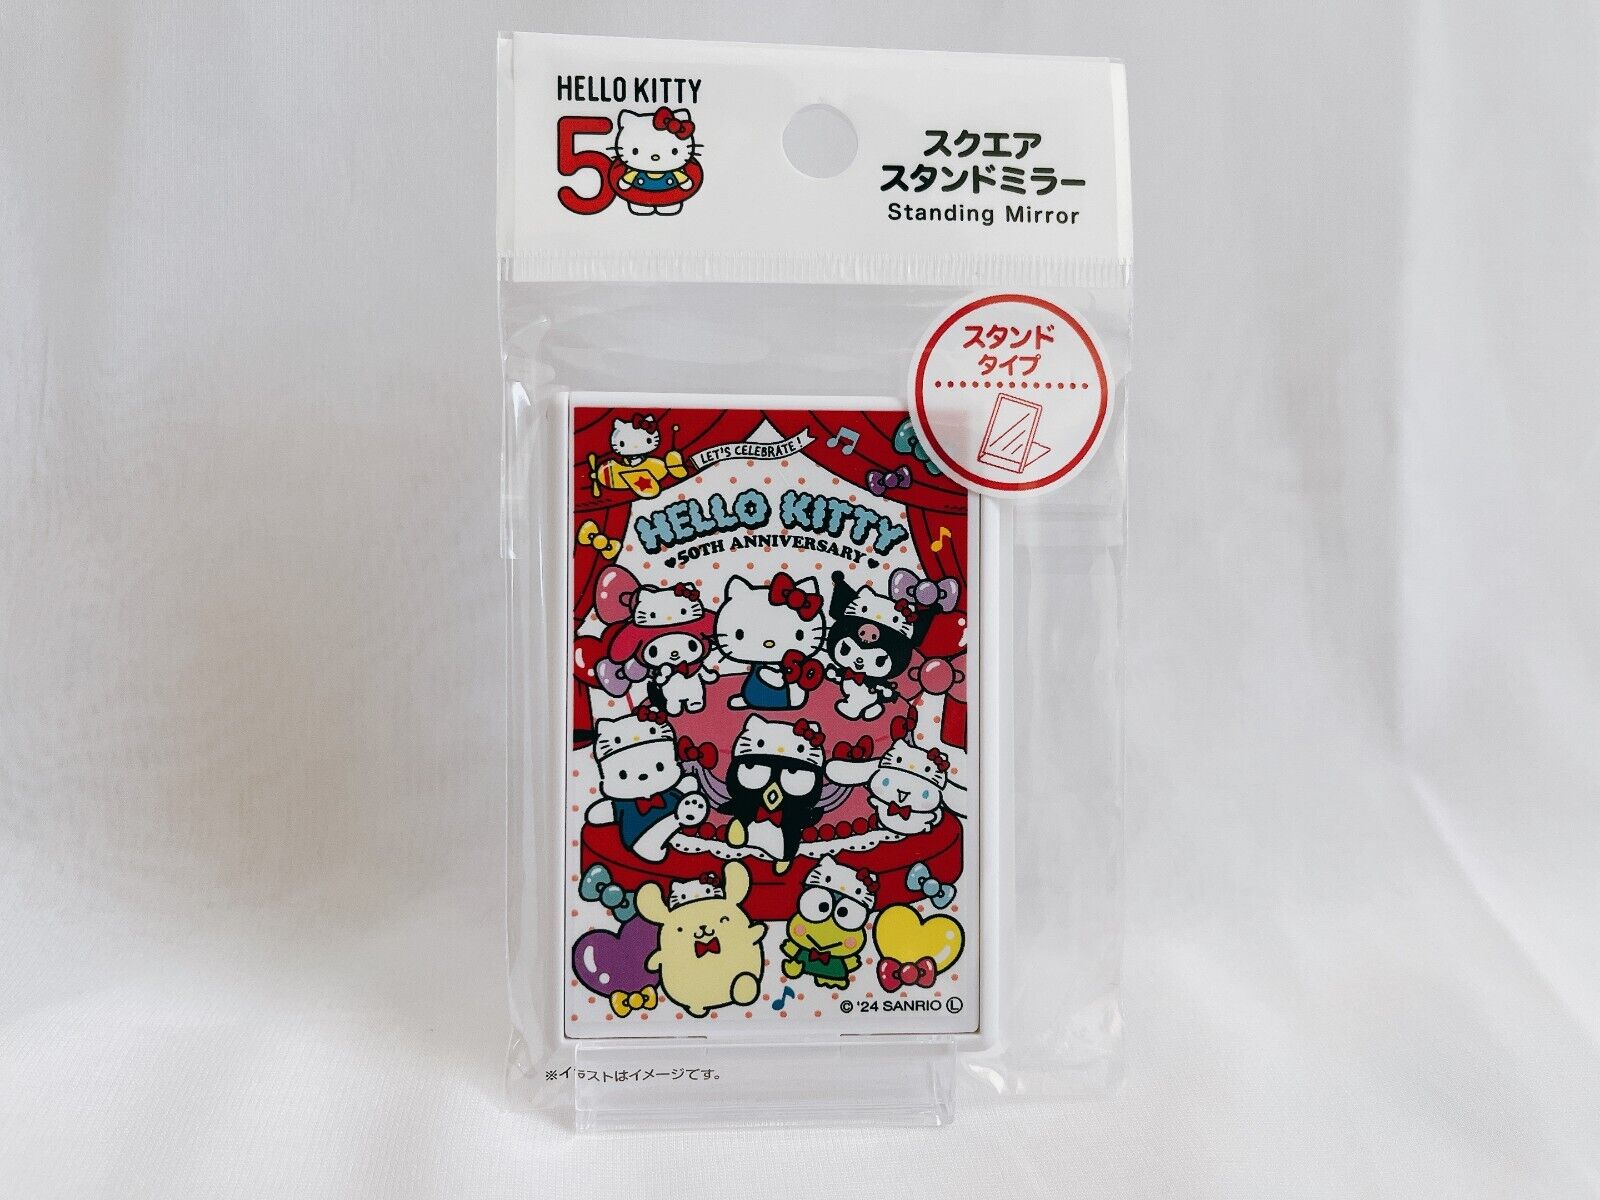 Hello Kitty 50th Anniversary Sanrio Daiso  Standing mirror japan only cosmetics